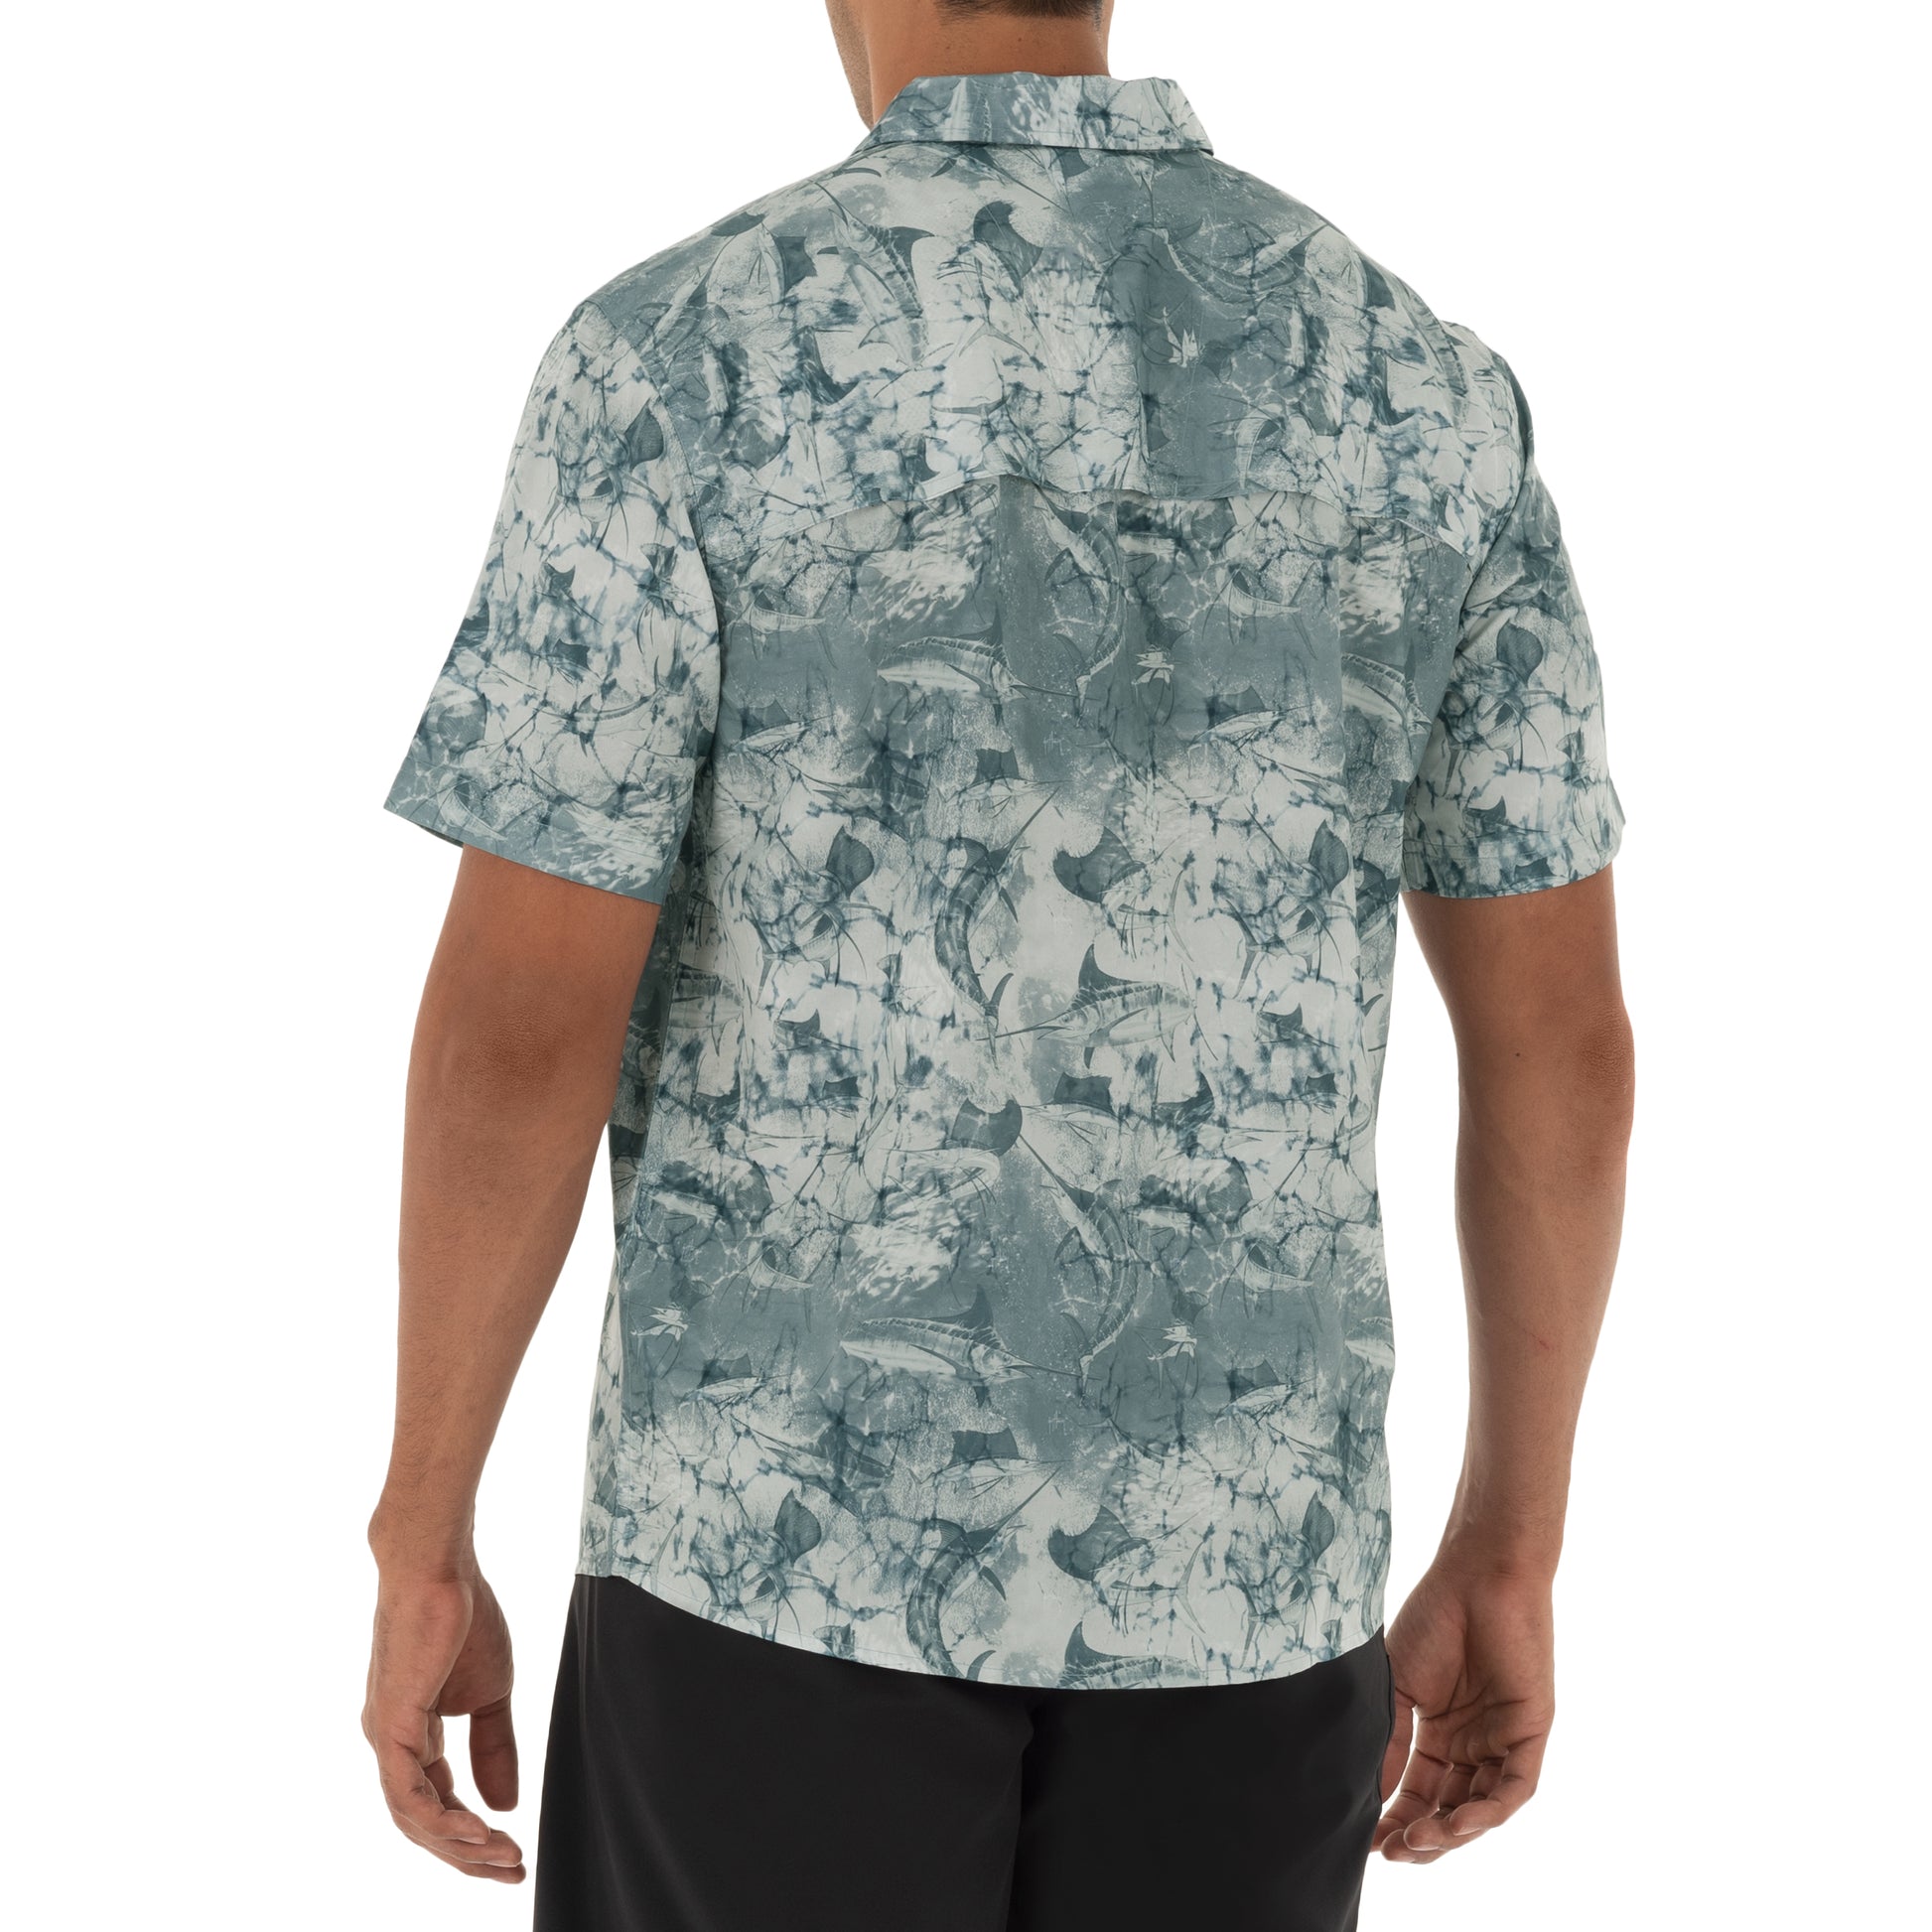 Men's Short Sleeve Printed Grey Fishing Shirt View 2